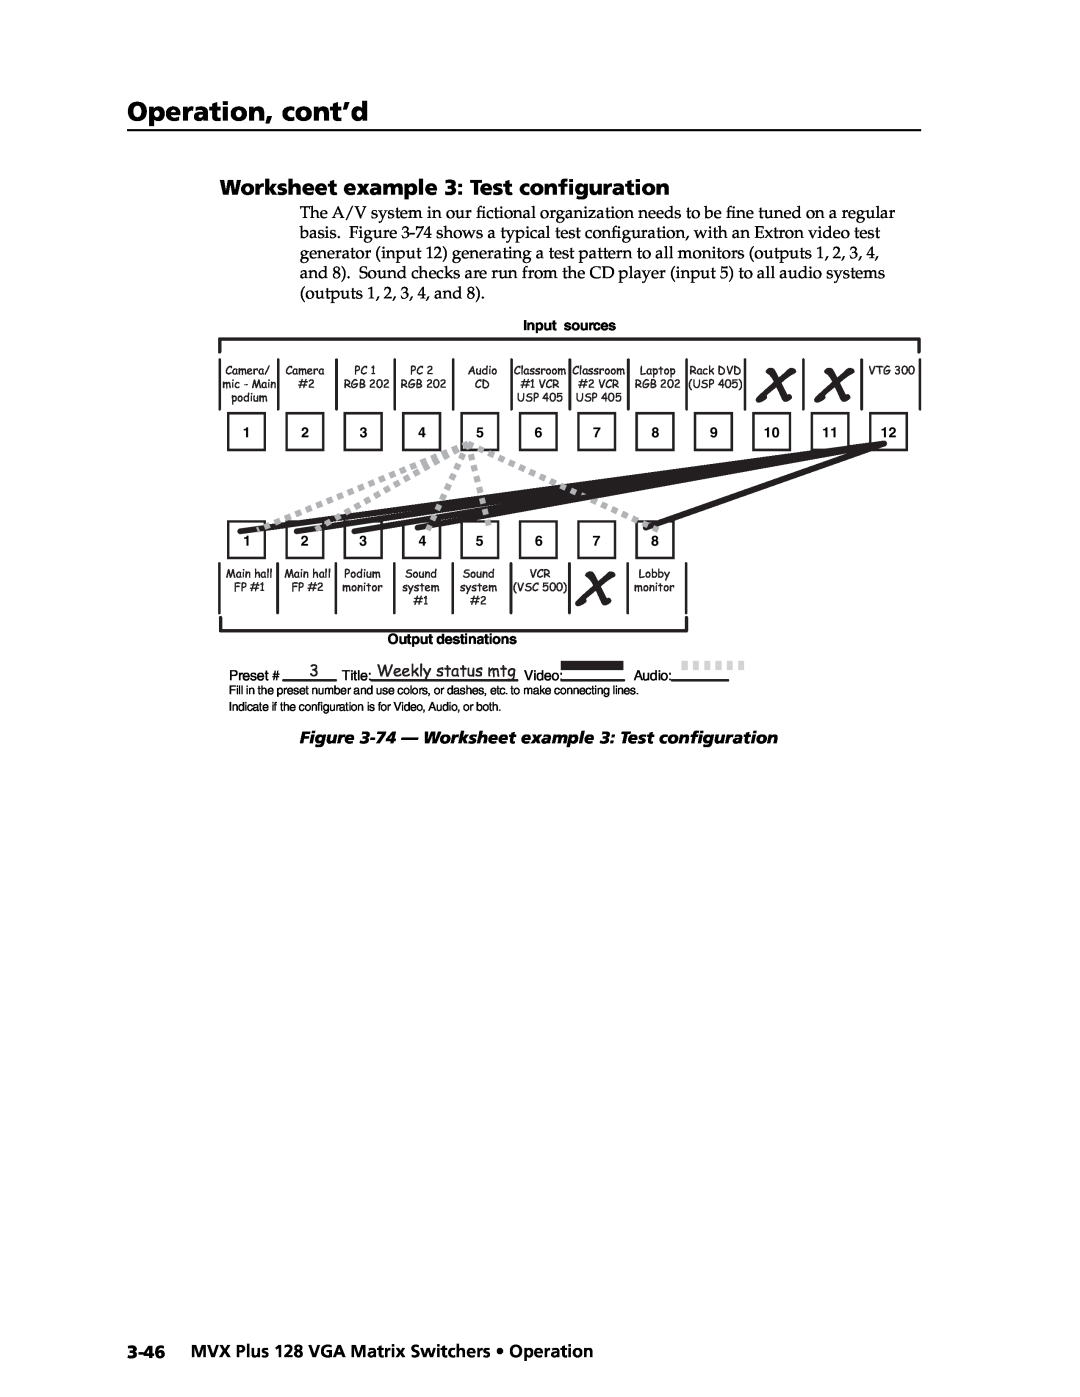 Extron electronic MVX PLUS 128 manual Worksheet example 3 Test conﬁguration, Operation, cont’d 